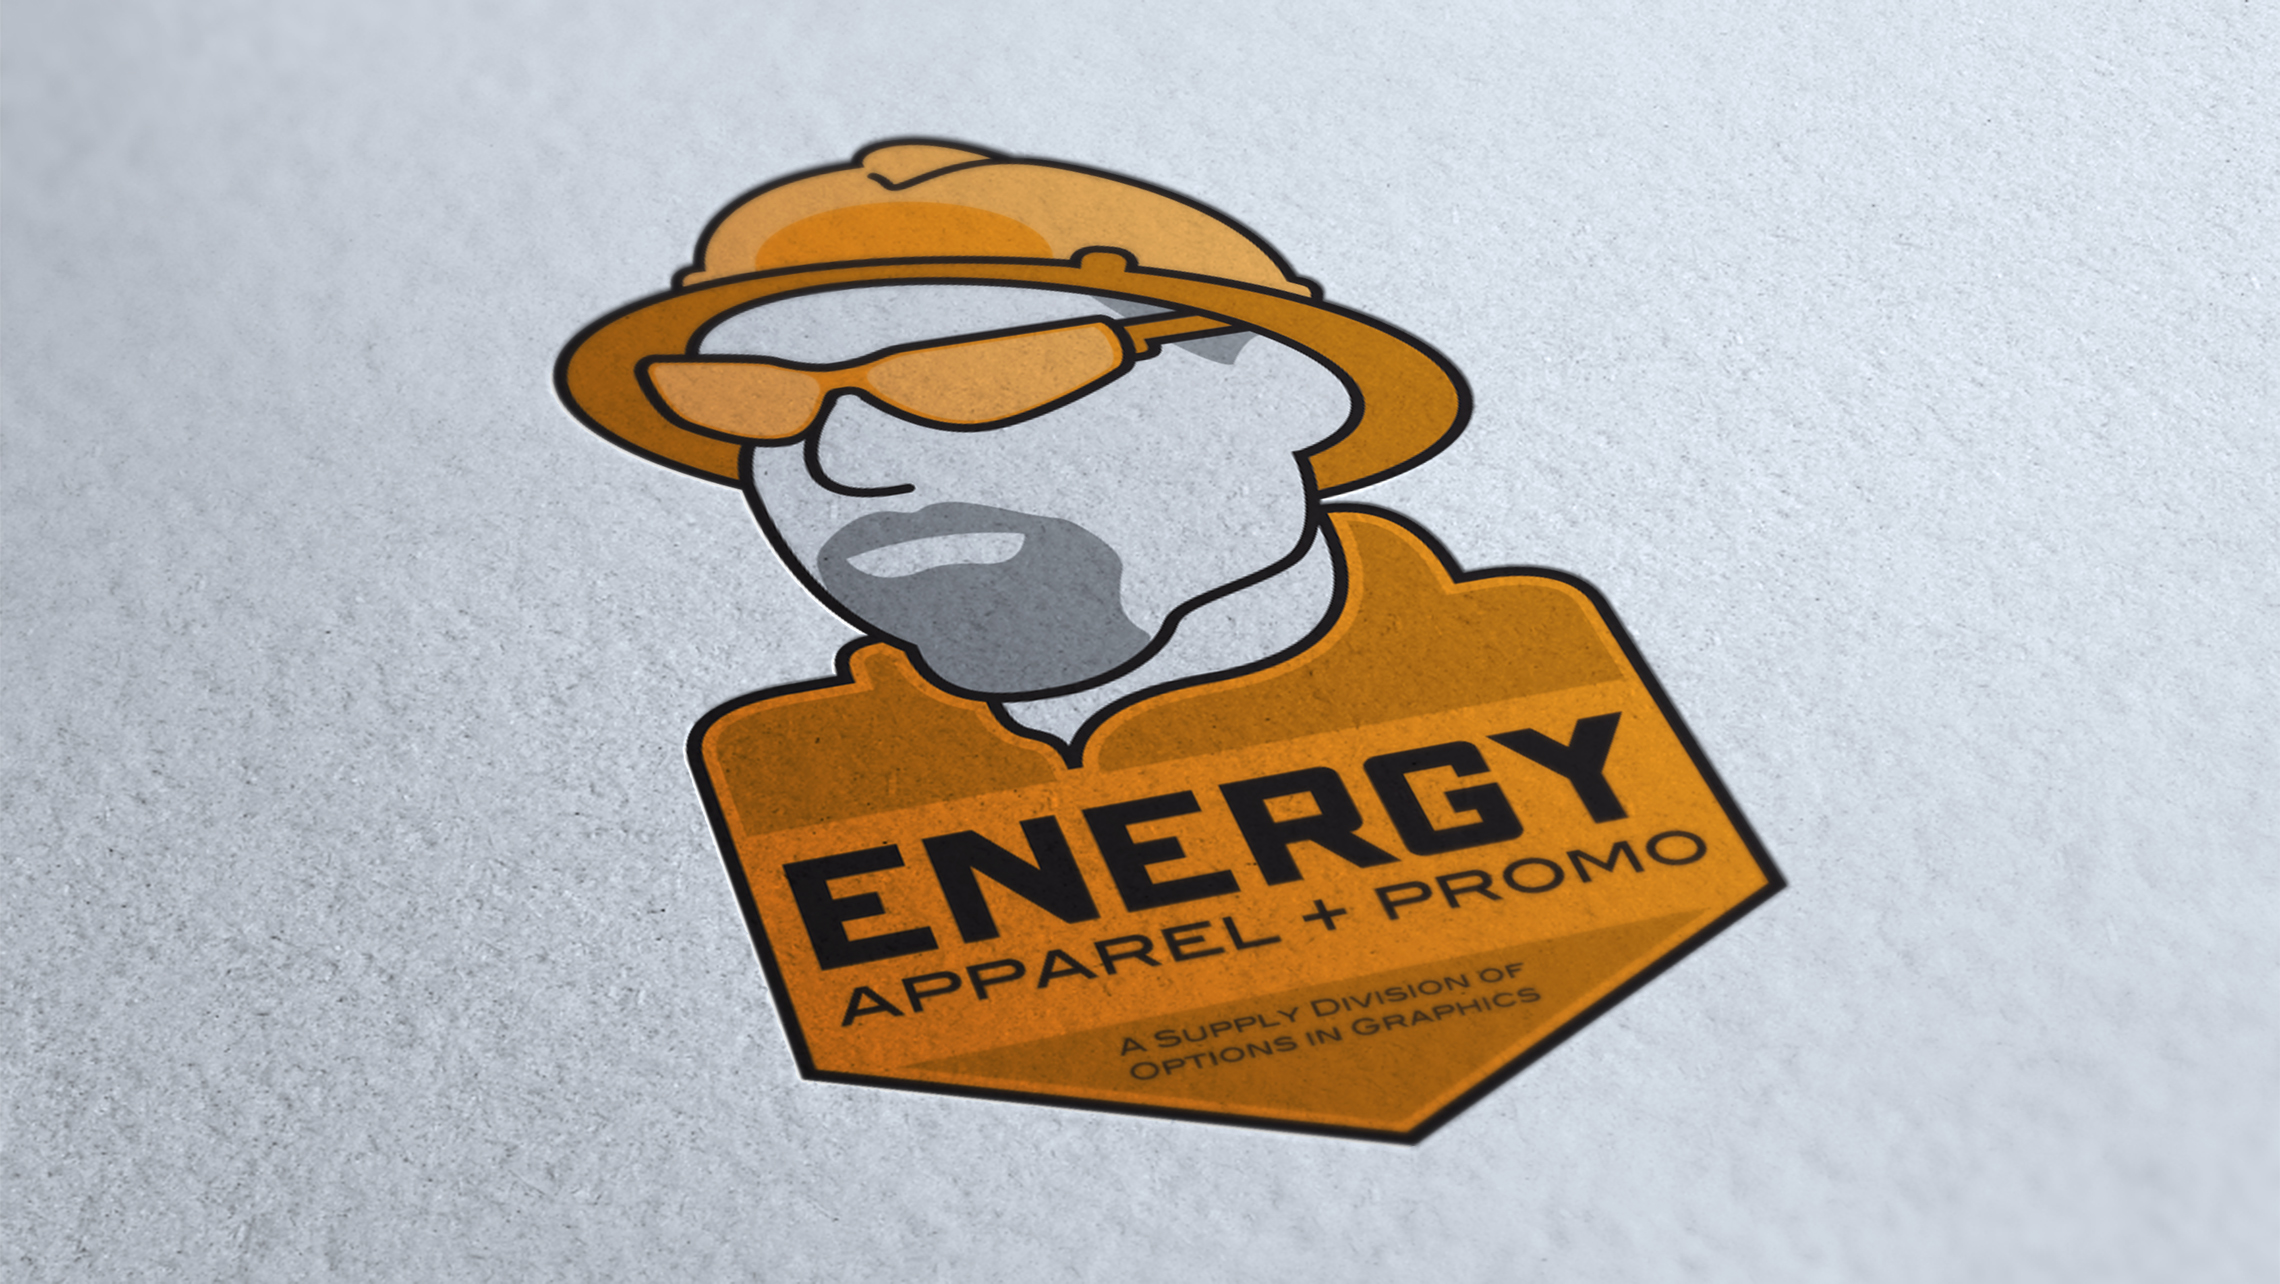 Energy Apparel + Promo Logo